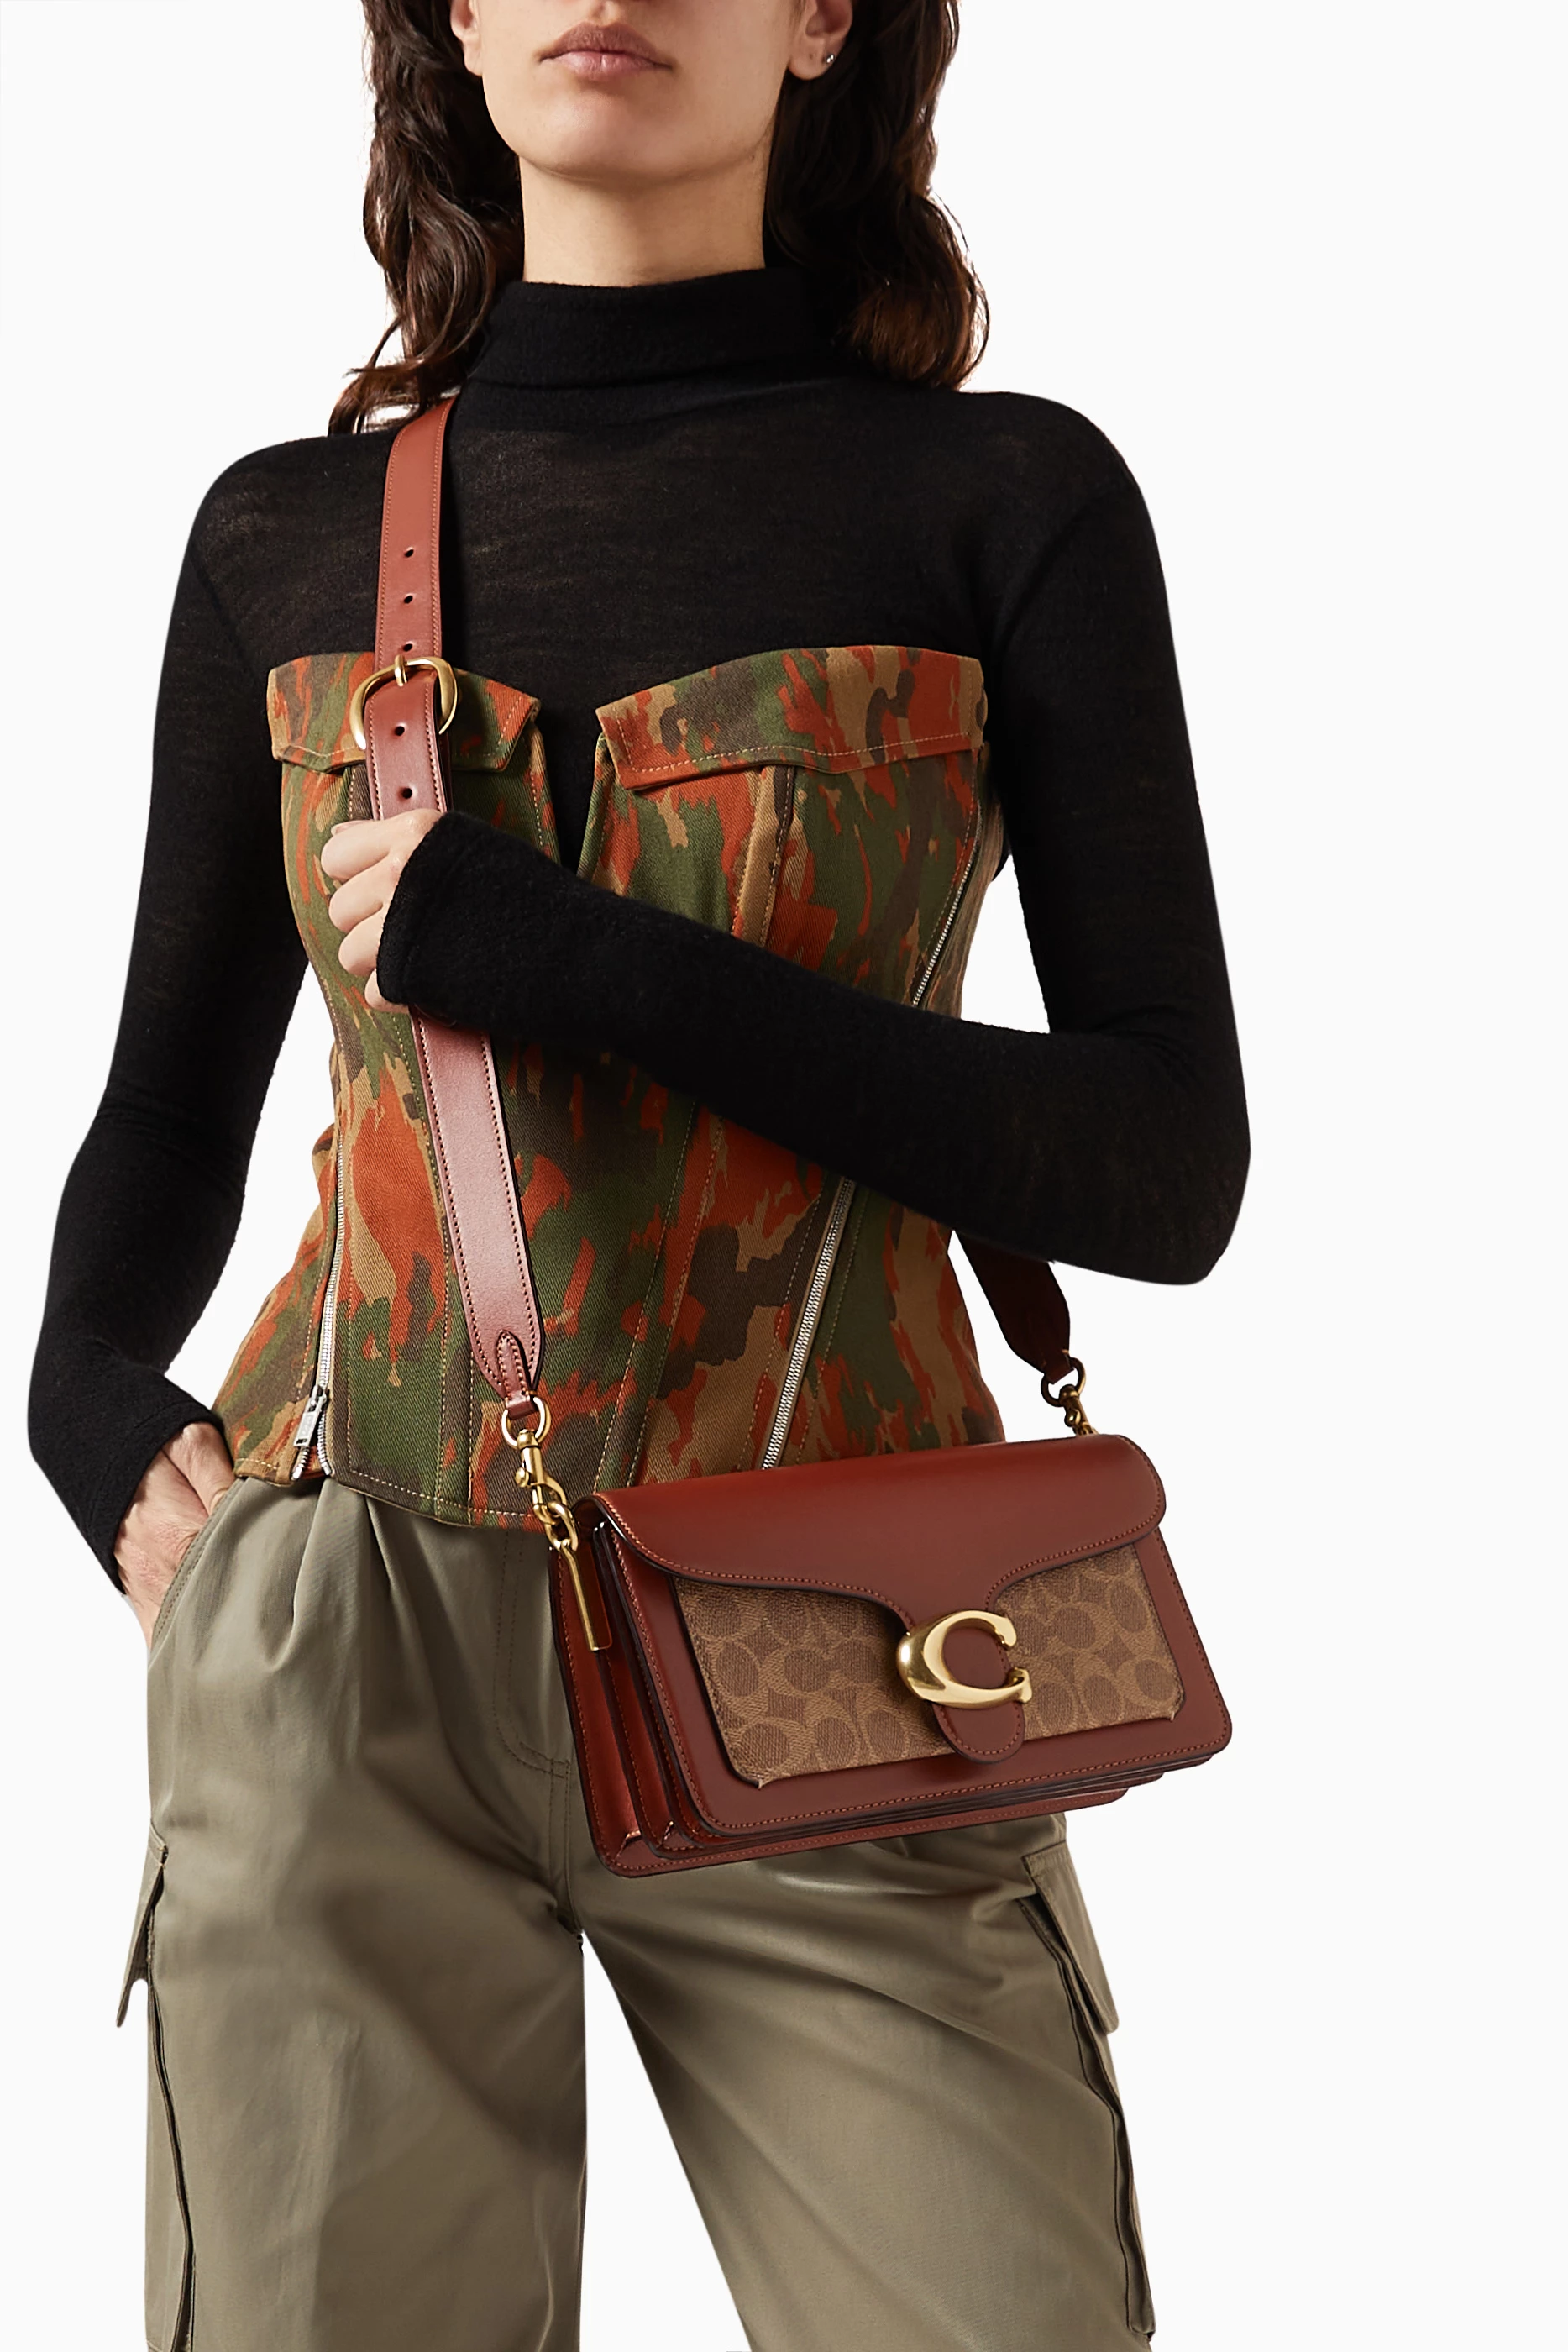 Coach Coated Canvas Signature Tabby Shoulder Bag 26, Tan Rust, One Size:  Handbags